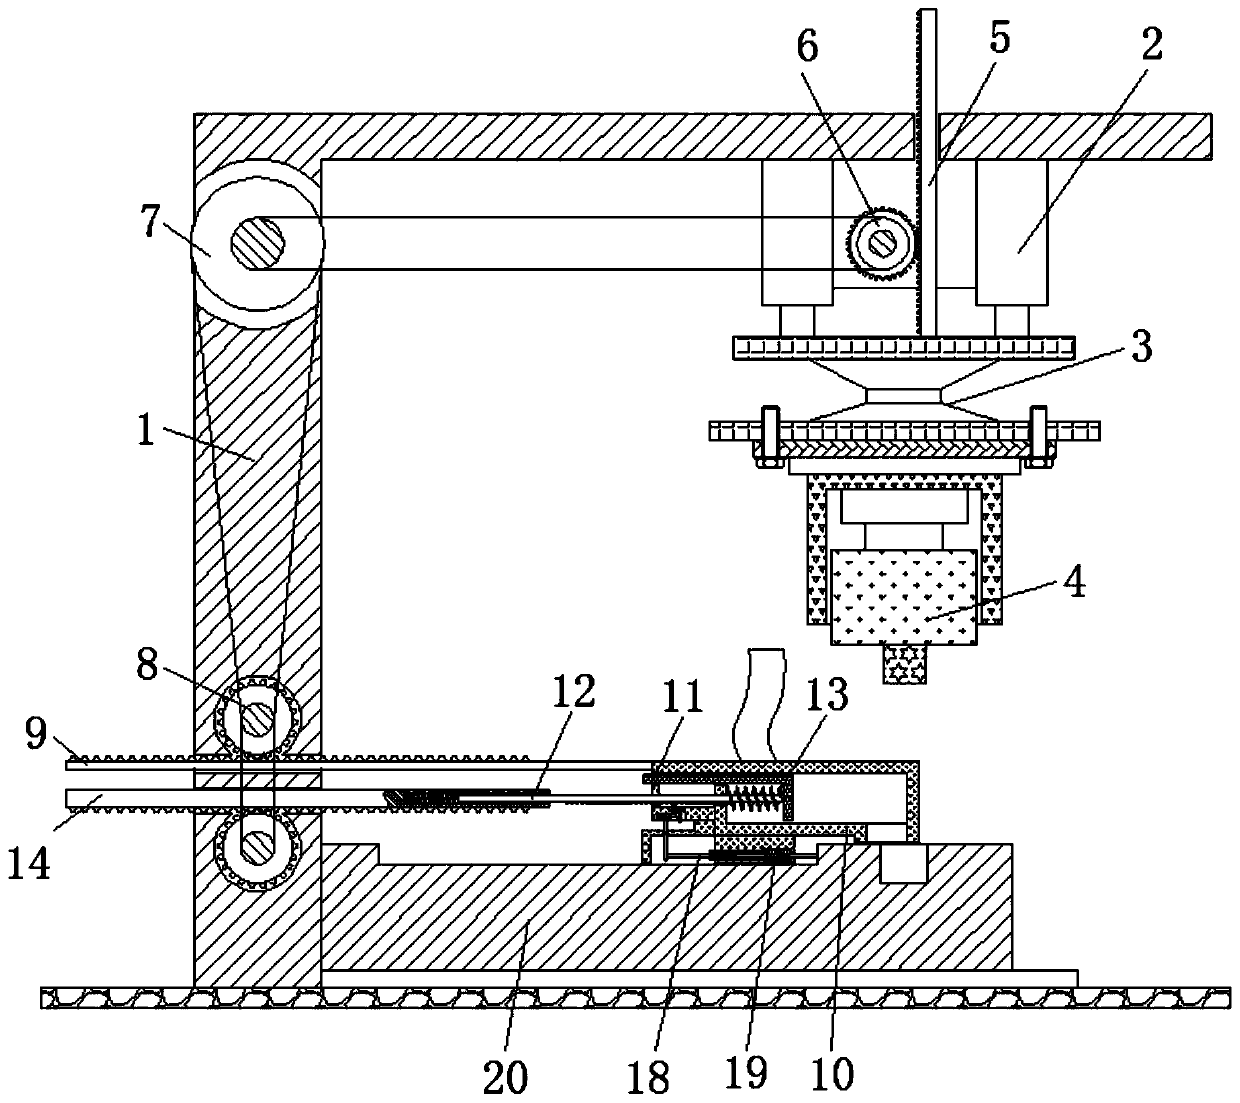 Powder metallurgy automatic feeding device based on gear rod transmission principle